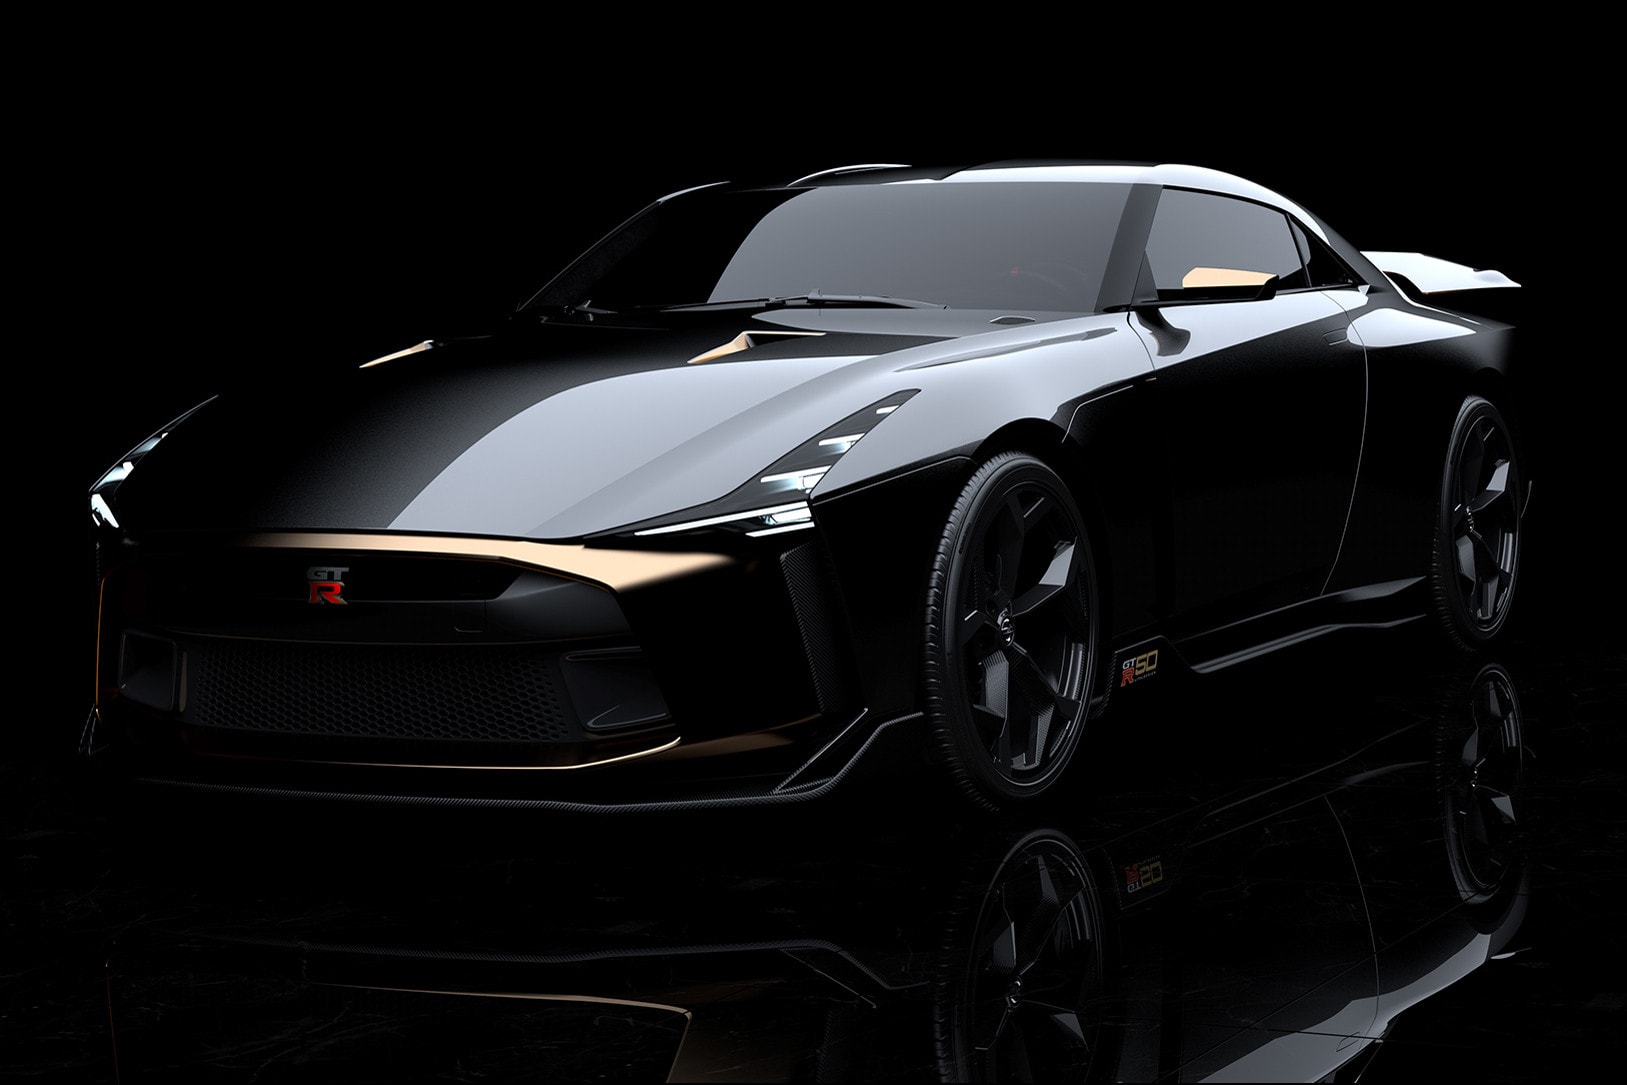 Nissan x Italdesign 夢之超跑 GT-R50 將限量生產不足 50 台！